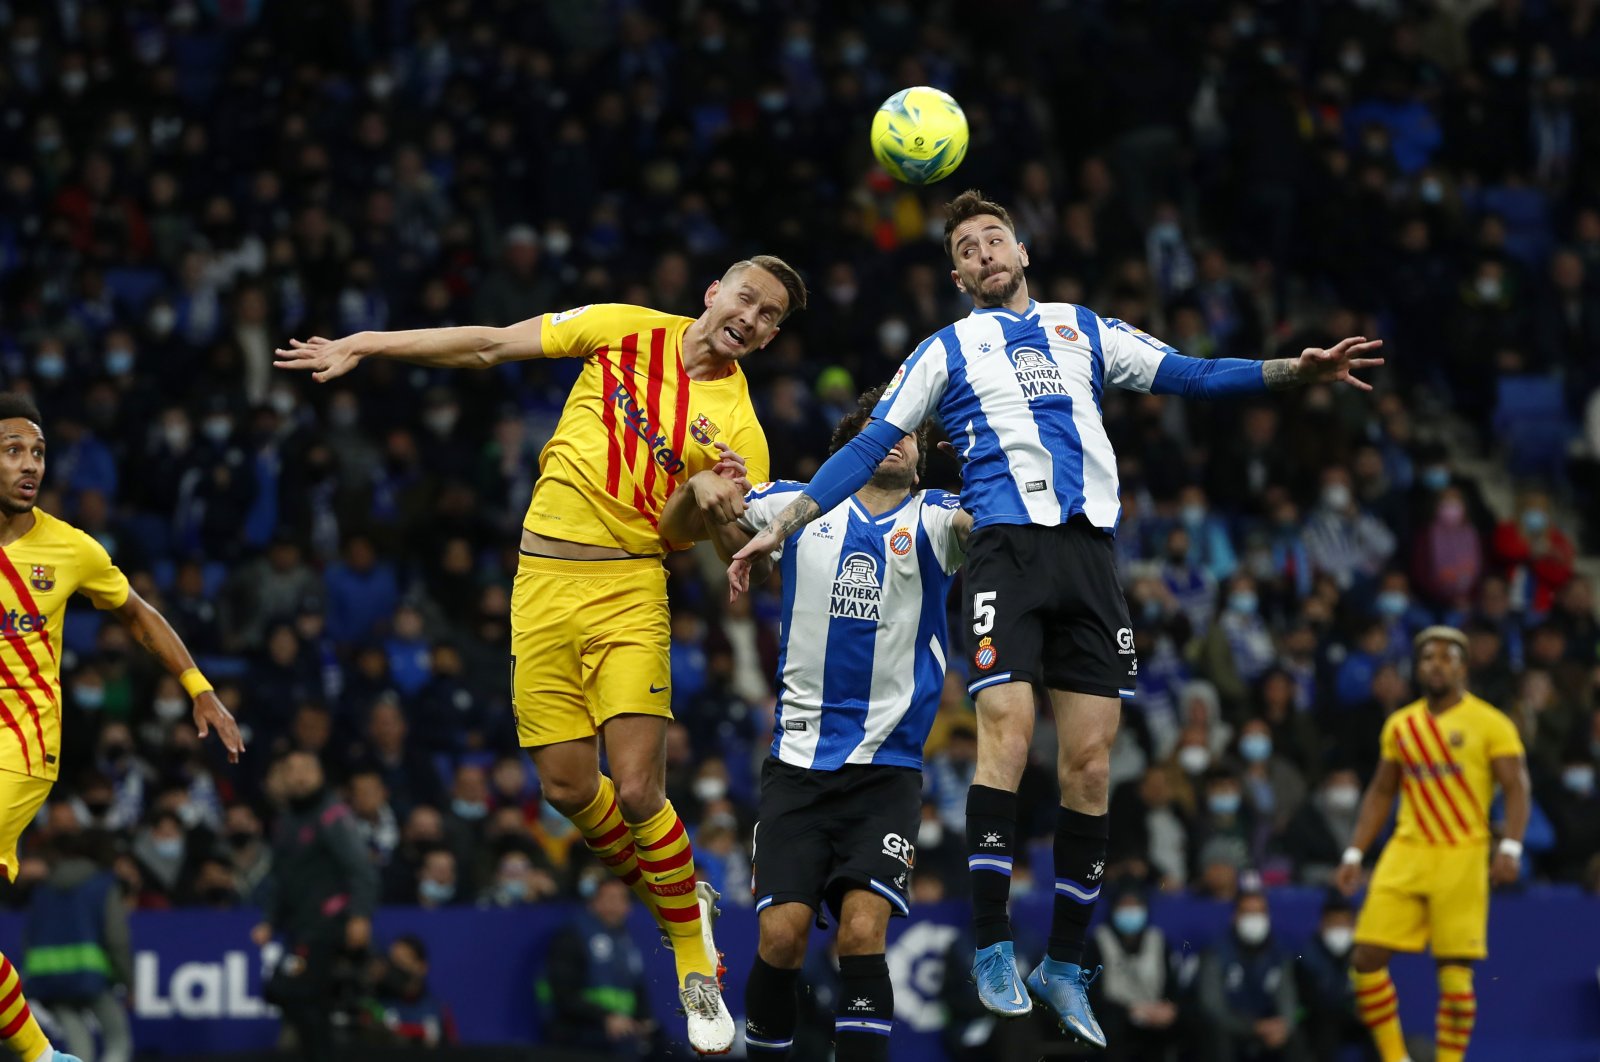 Barcelona&#039;s Luuk de Jong (2nd L) jumps for the ball with Espanyol&#039;s Fernando Calero (2nd R) during a La Liga match, Barcelona, Spain, Feb. 13, 2022. (AP Photo)